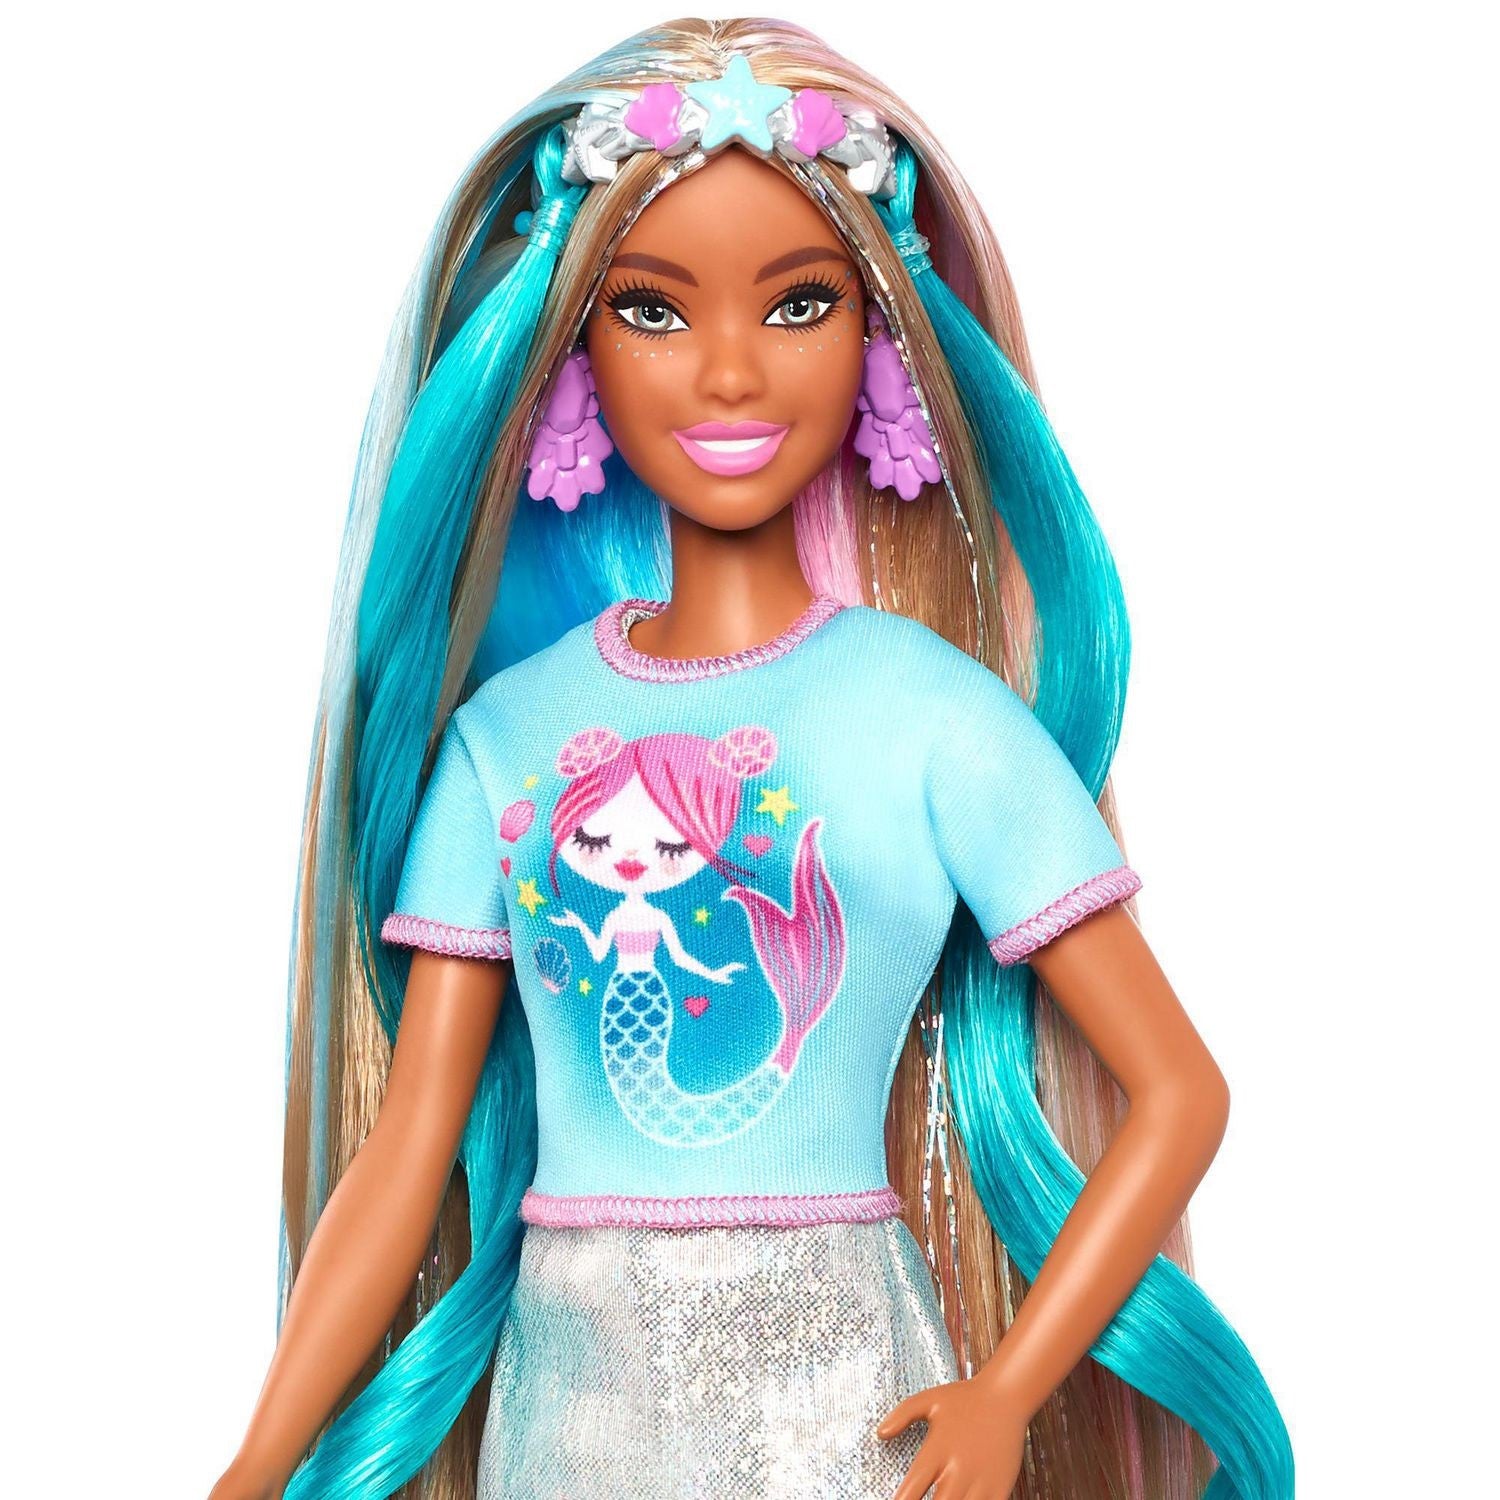 Barbie Fantasy Hair Doll - Mermaid and Unicorn Looks NEW DENTED BOX